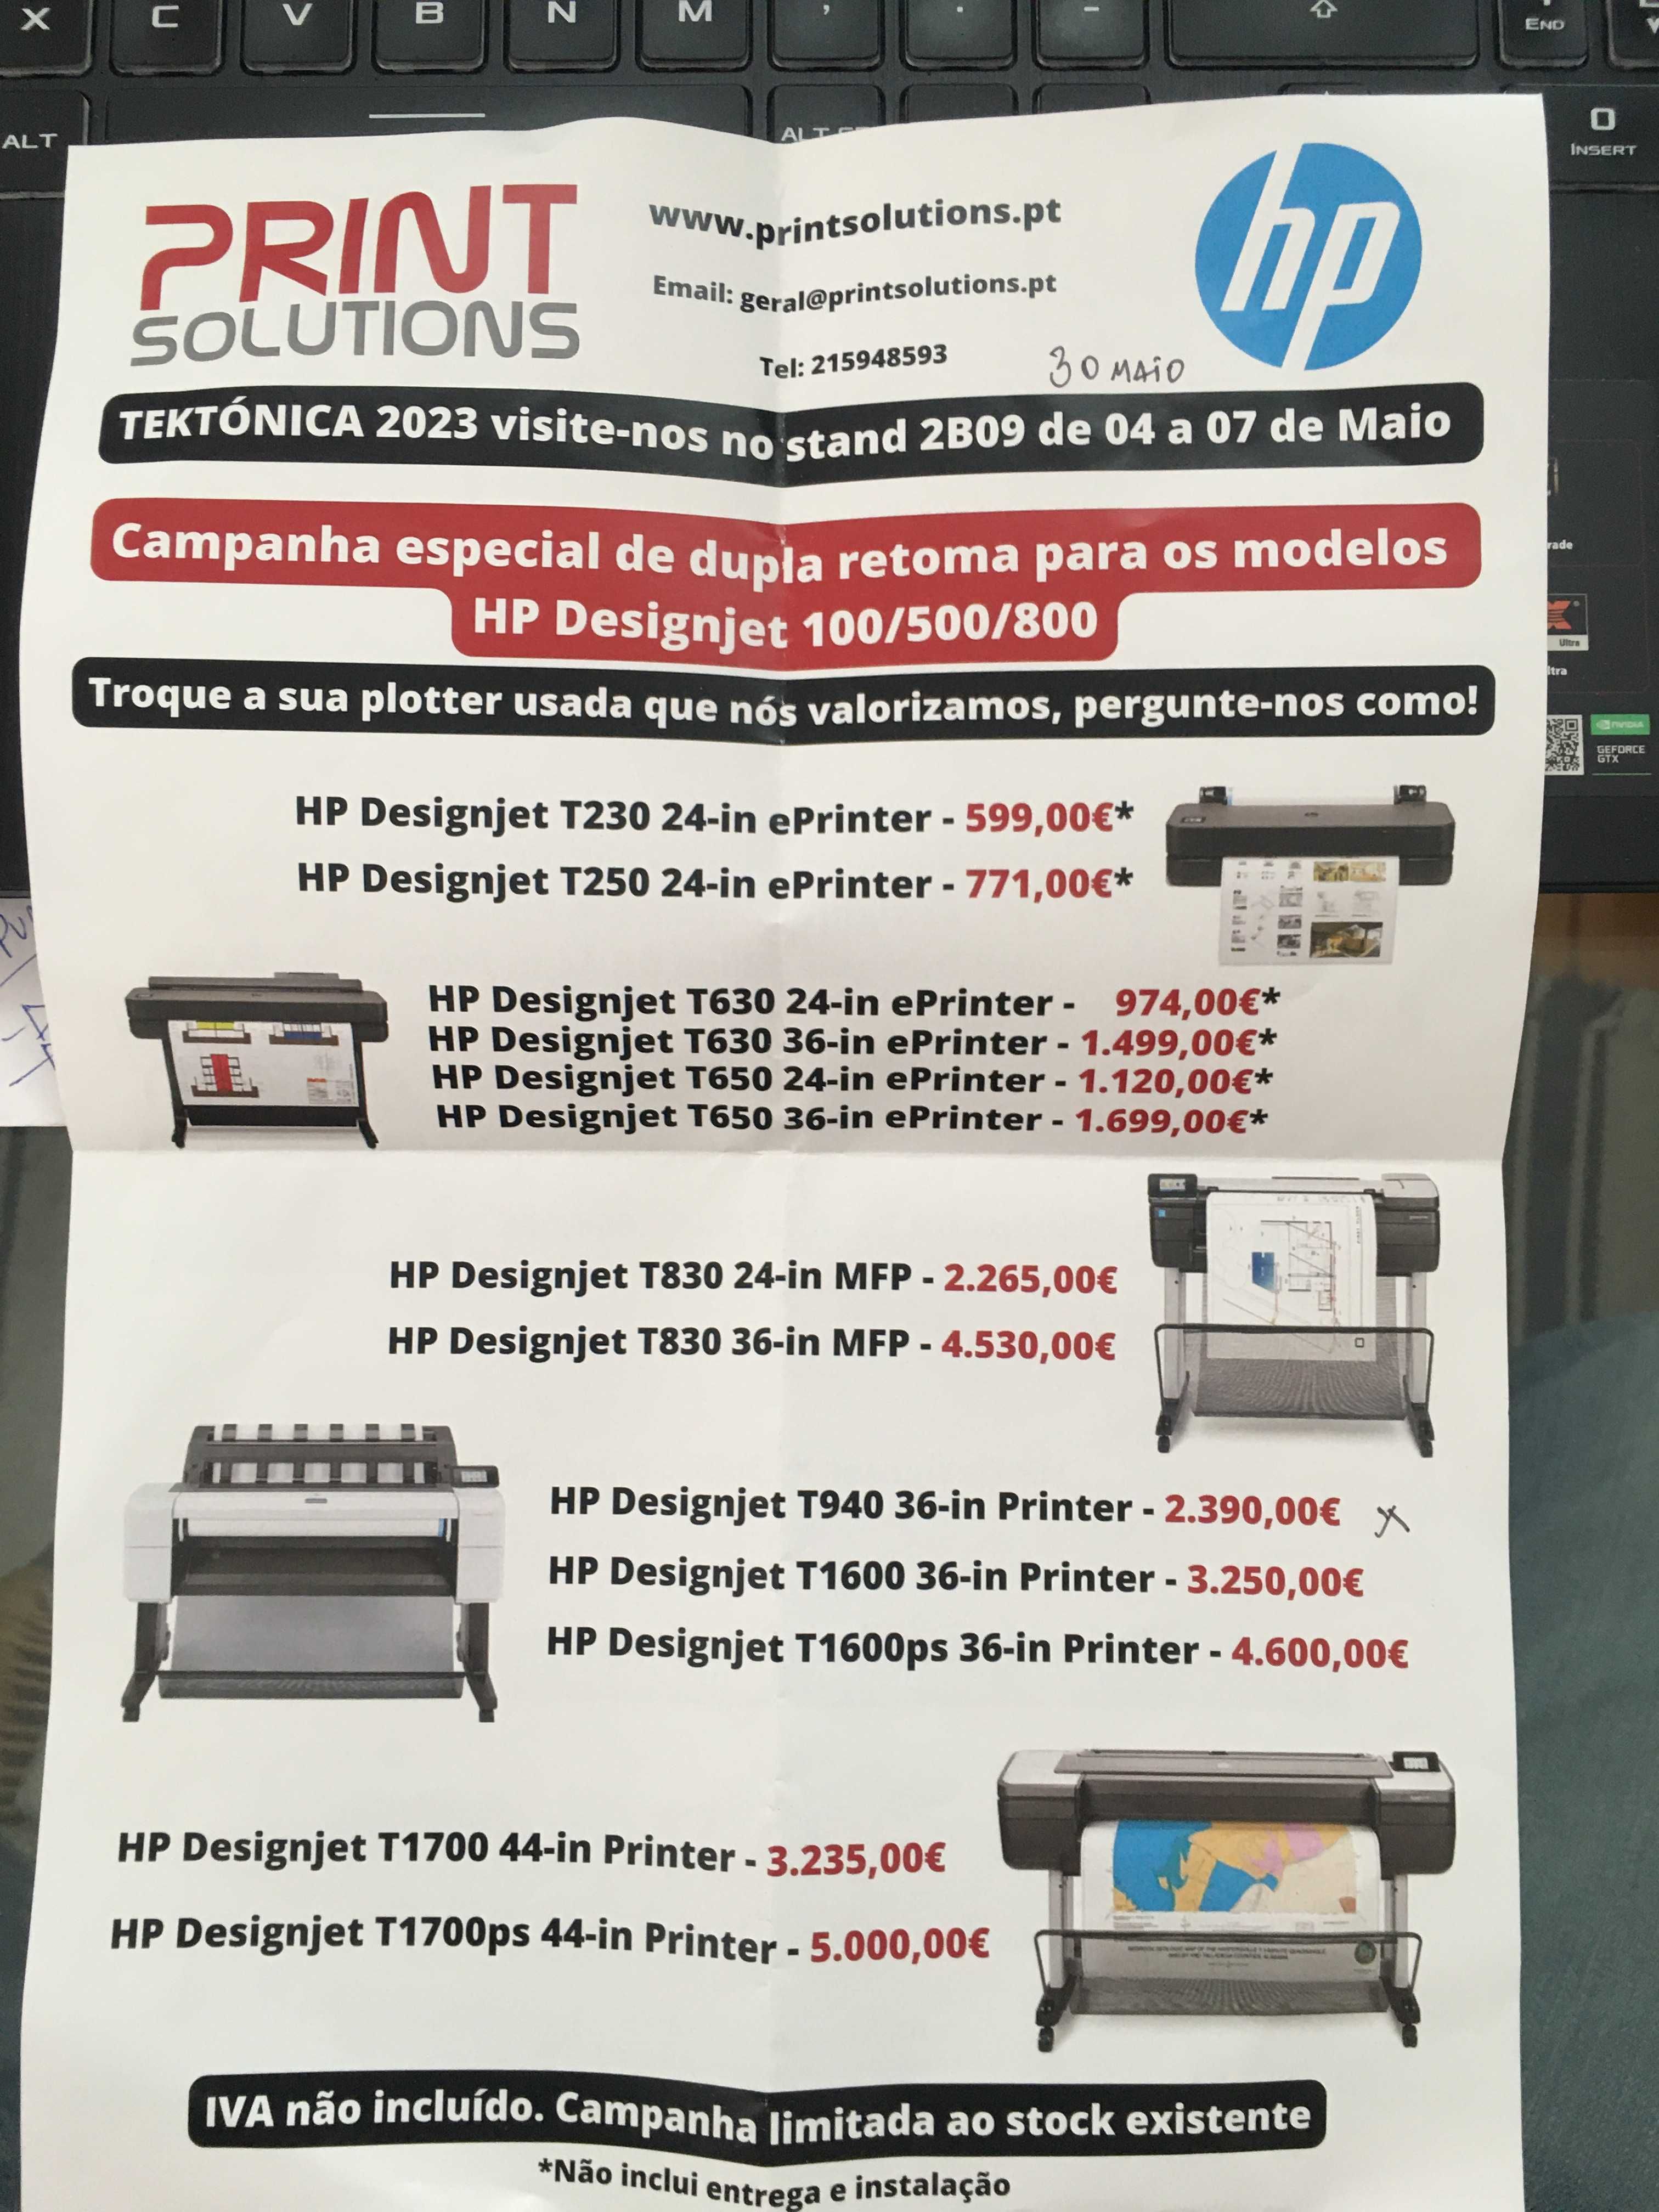 HP Designjet 500 42" - vale € em retoma